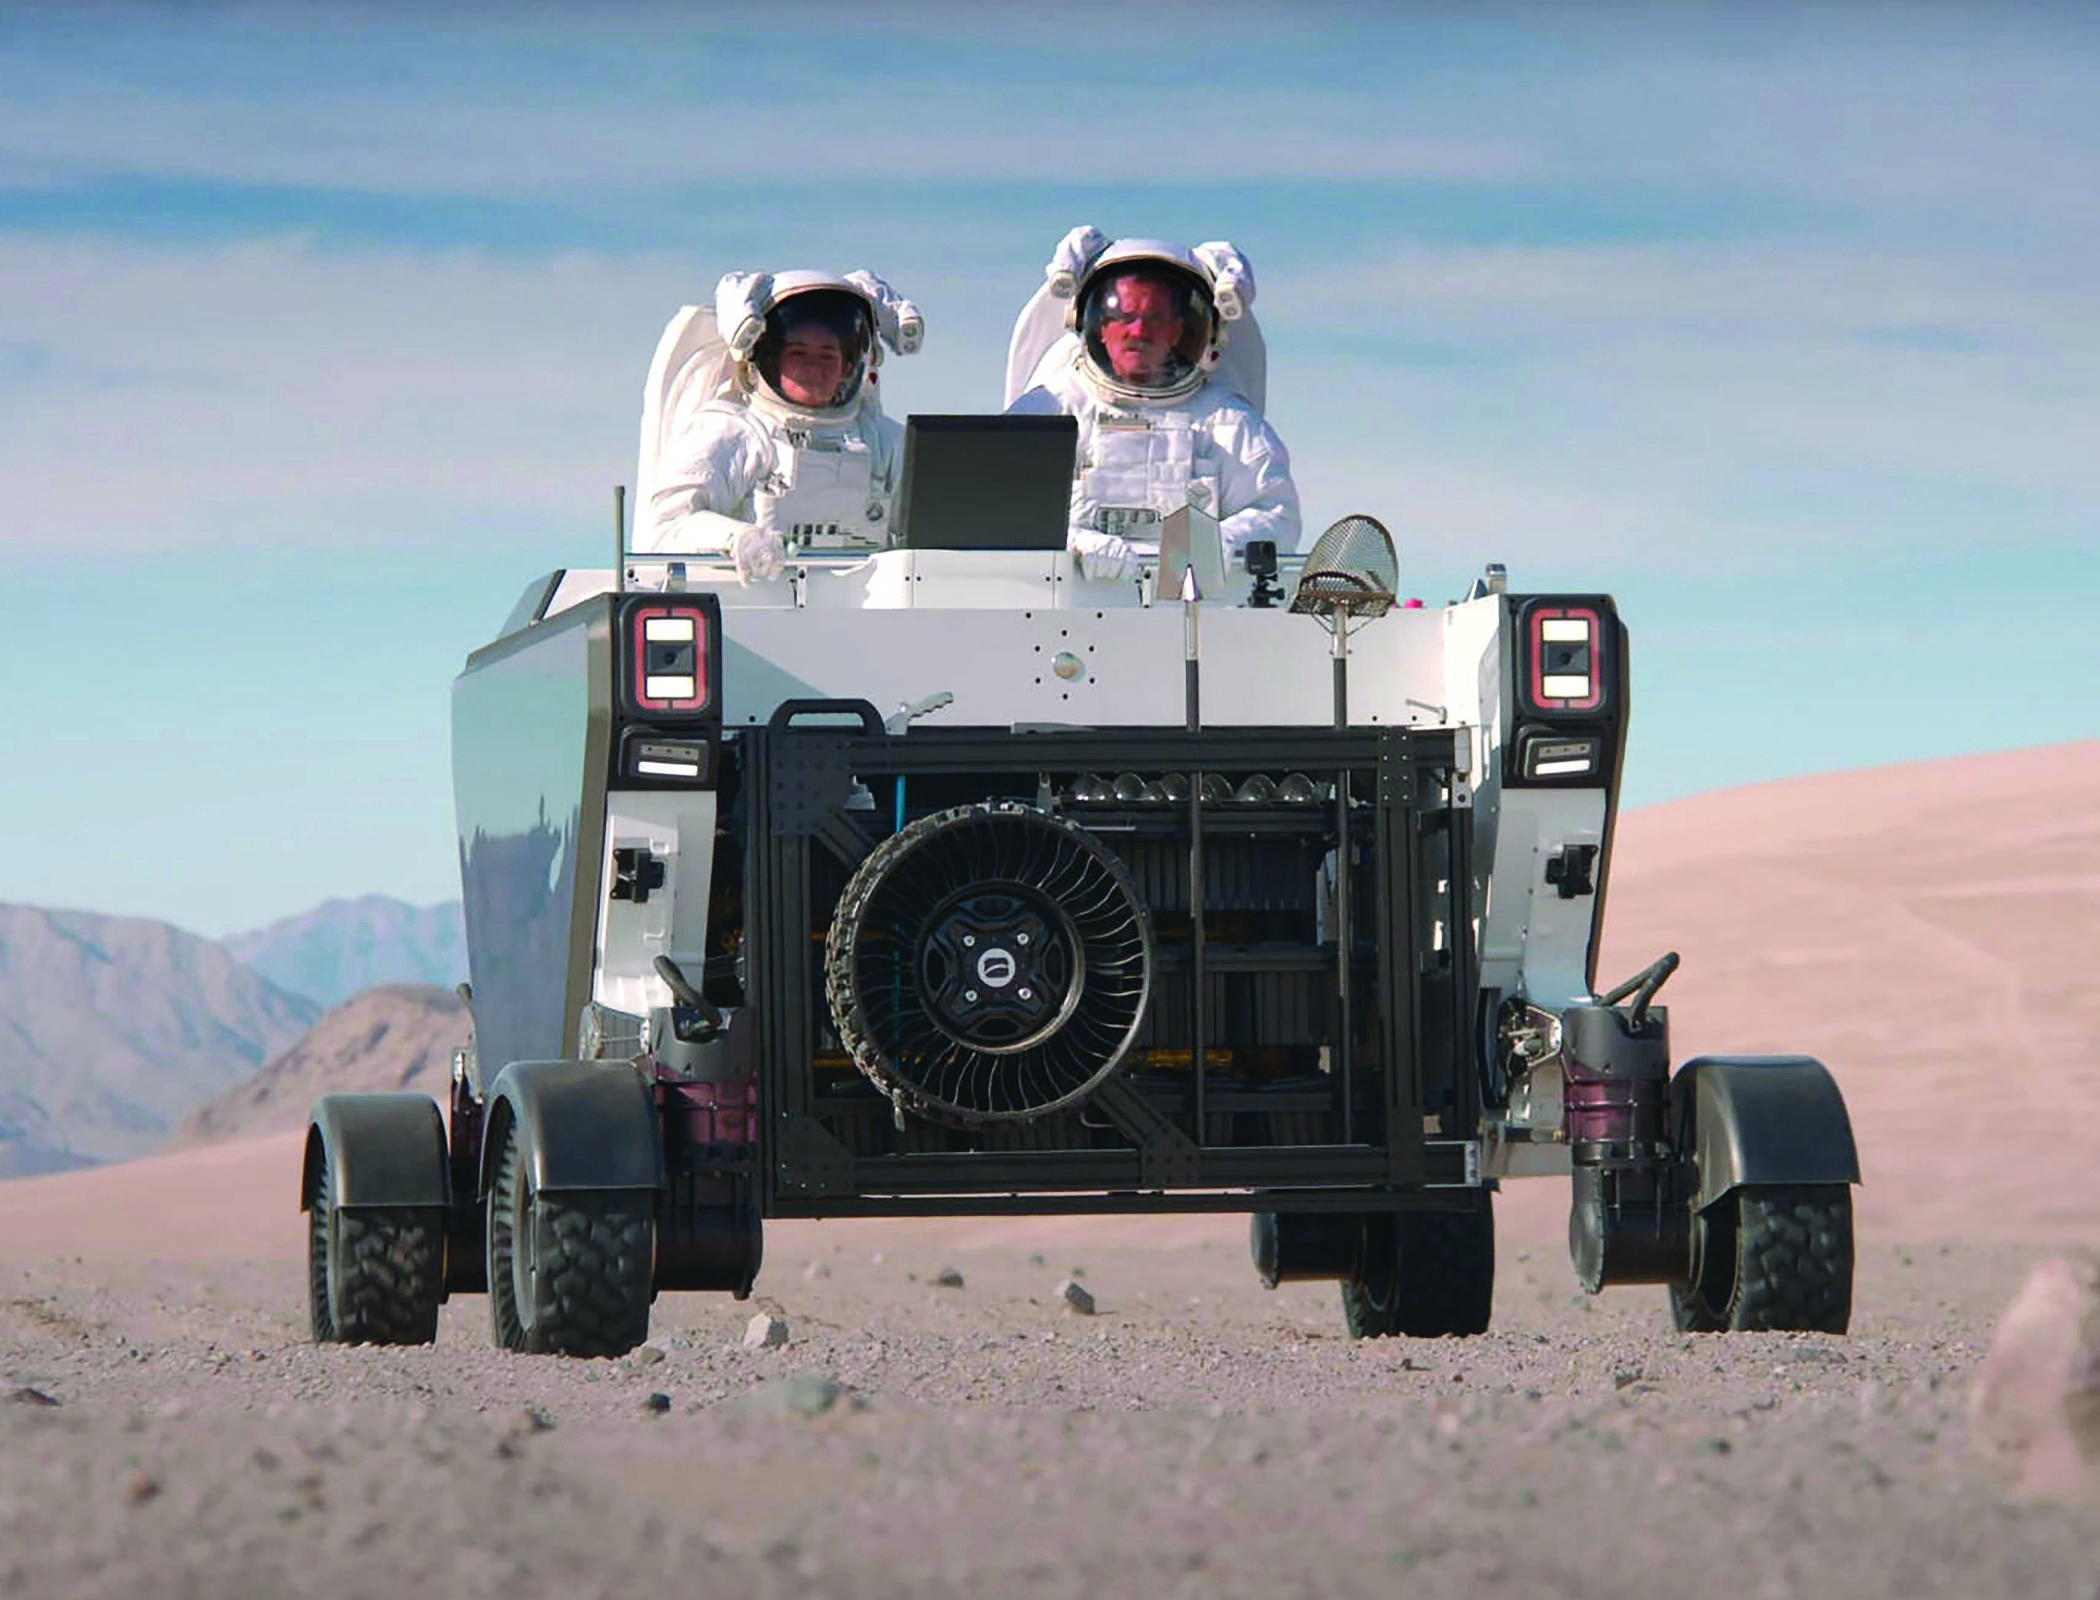 The bigger picture: FLEX Lunar Rover